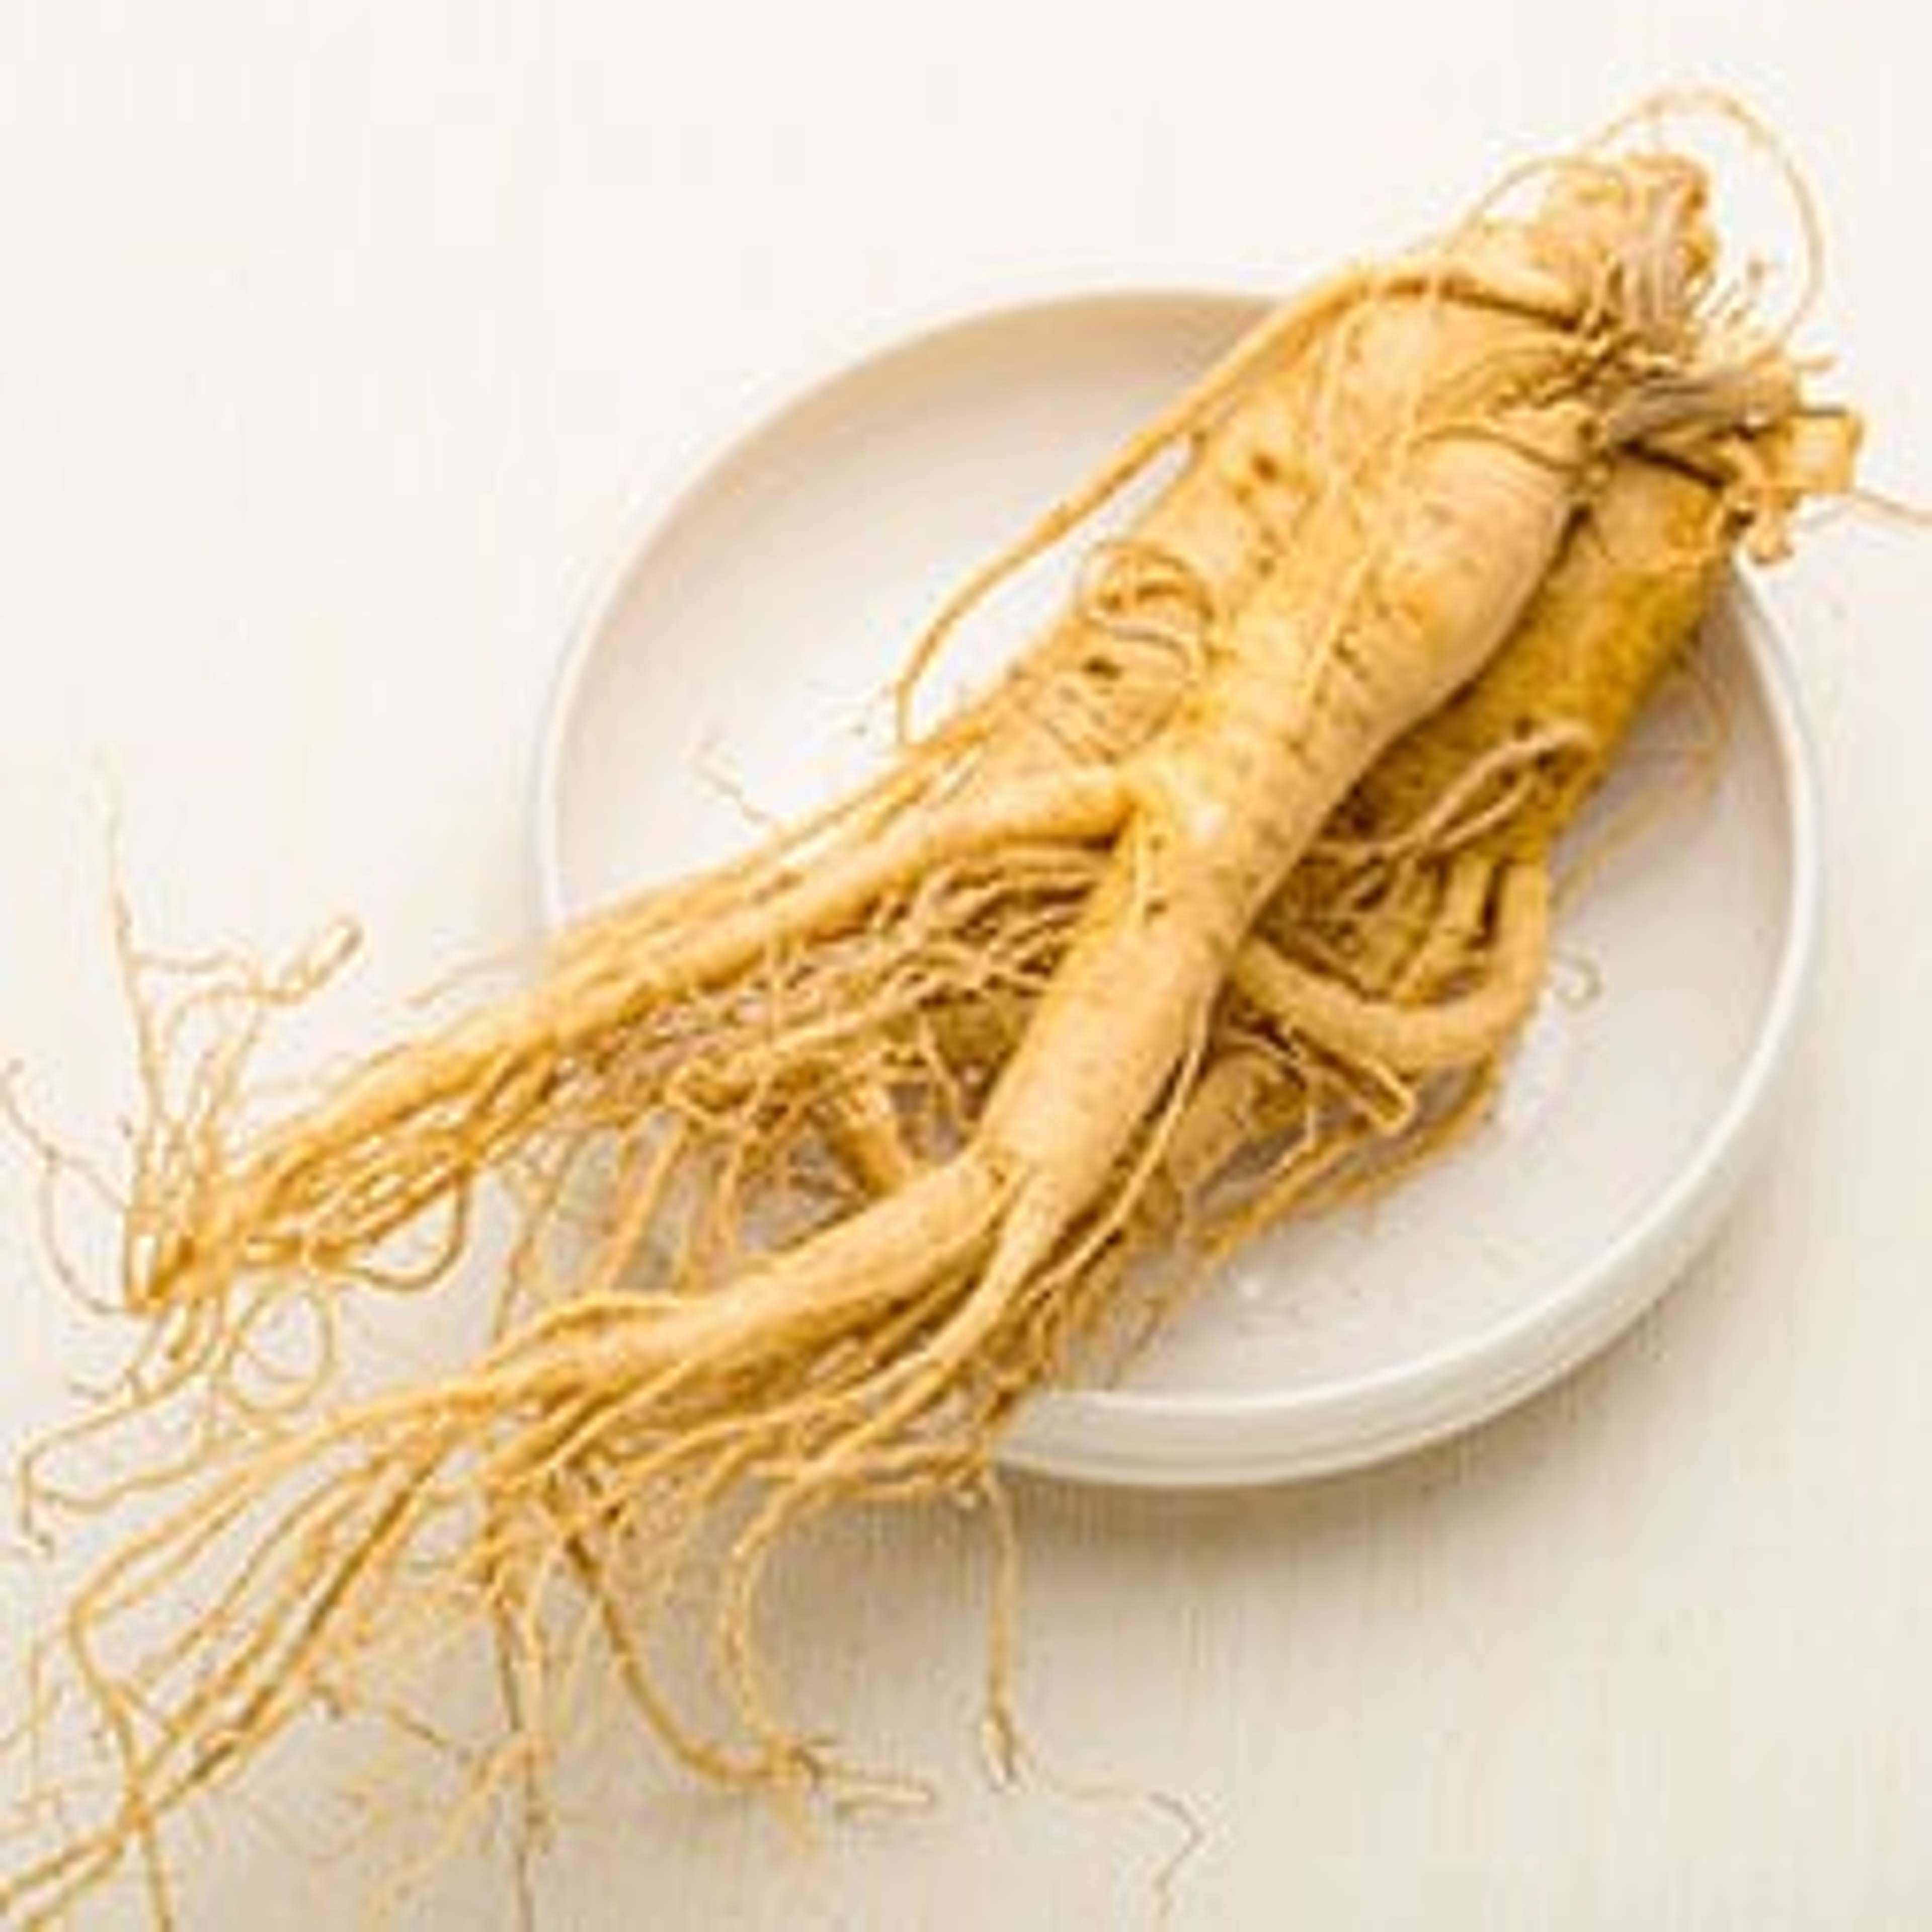 Ginseng - The magic root